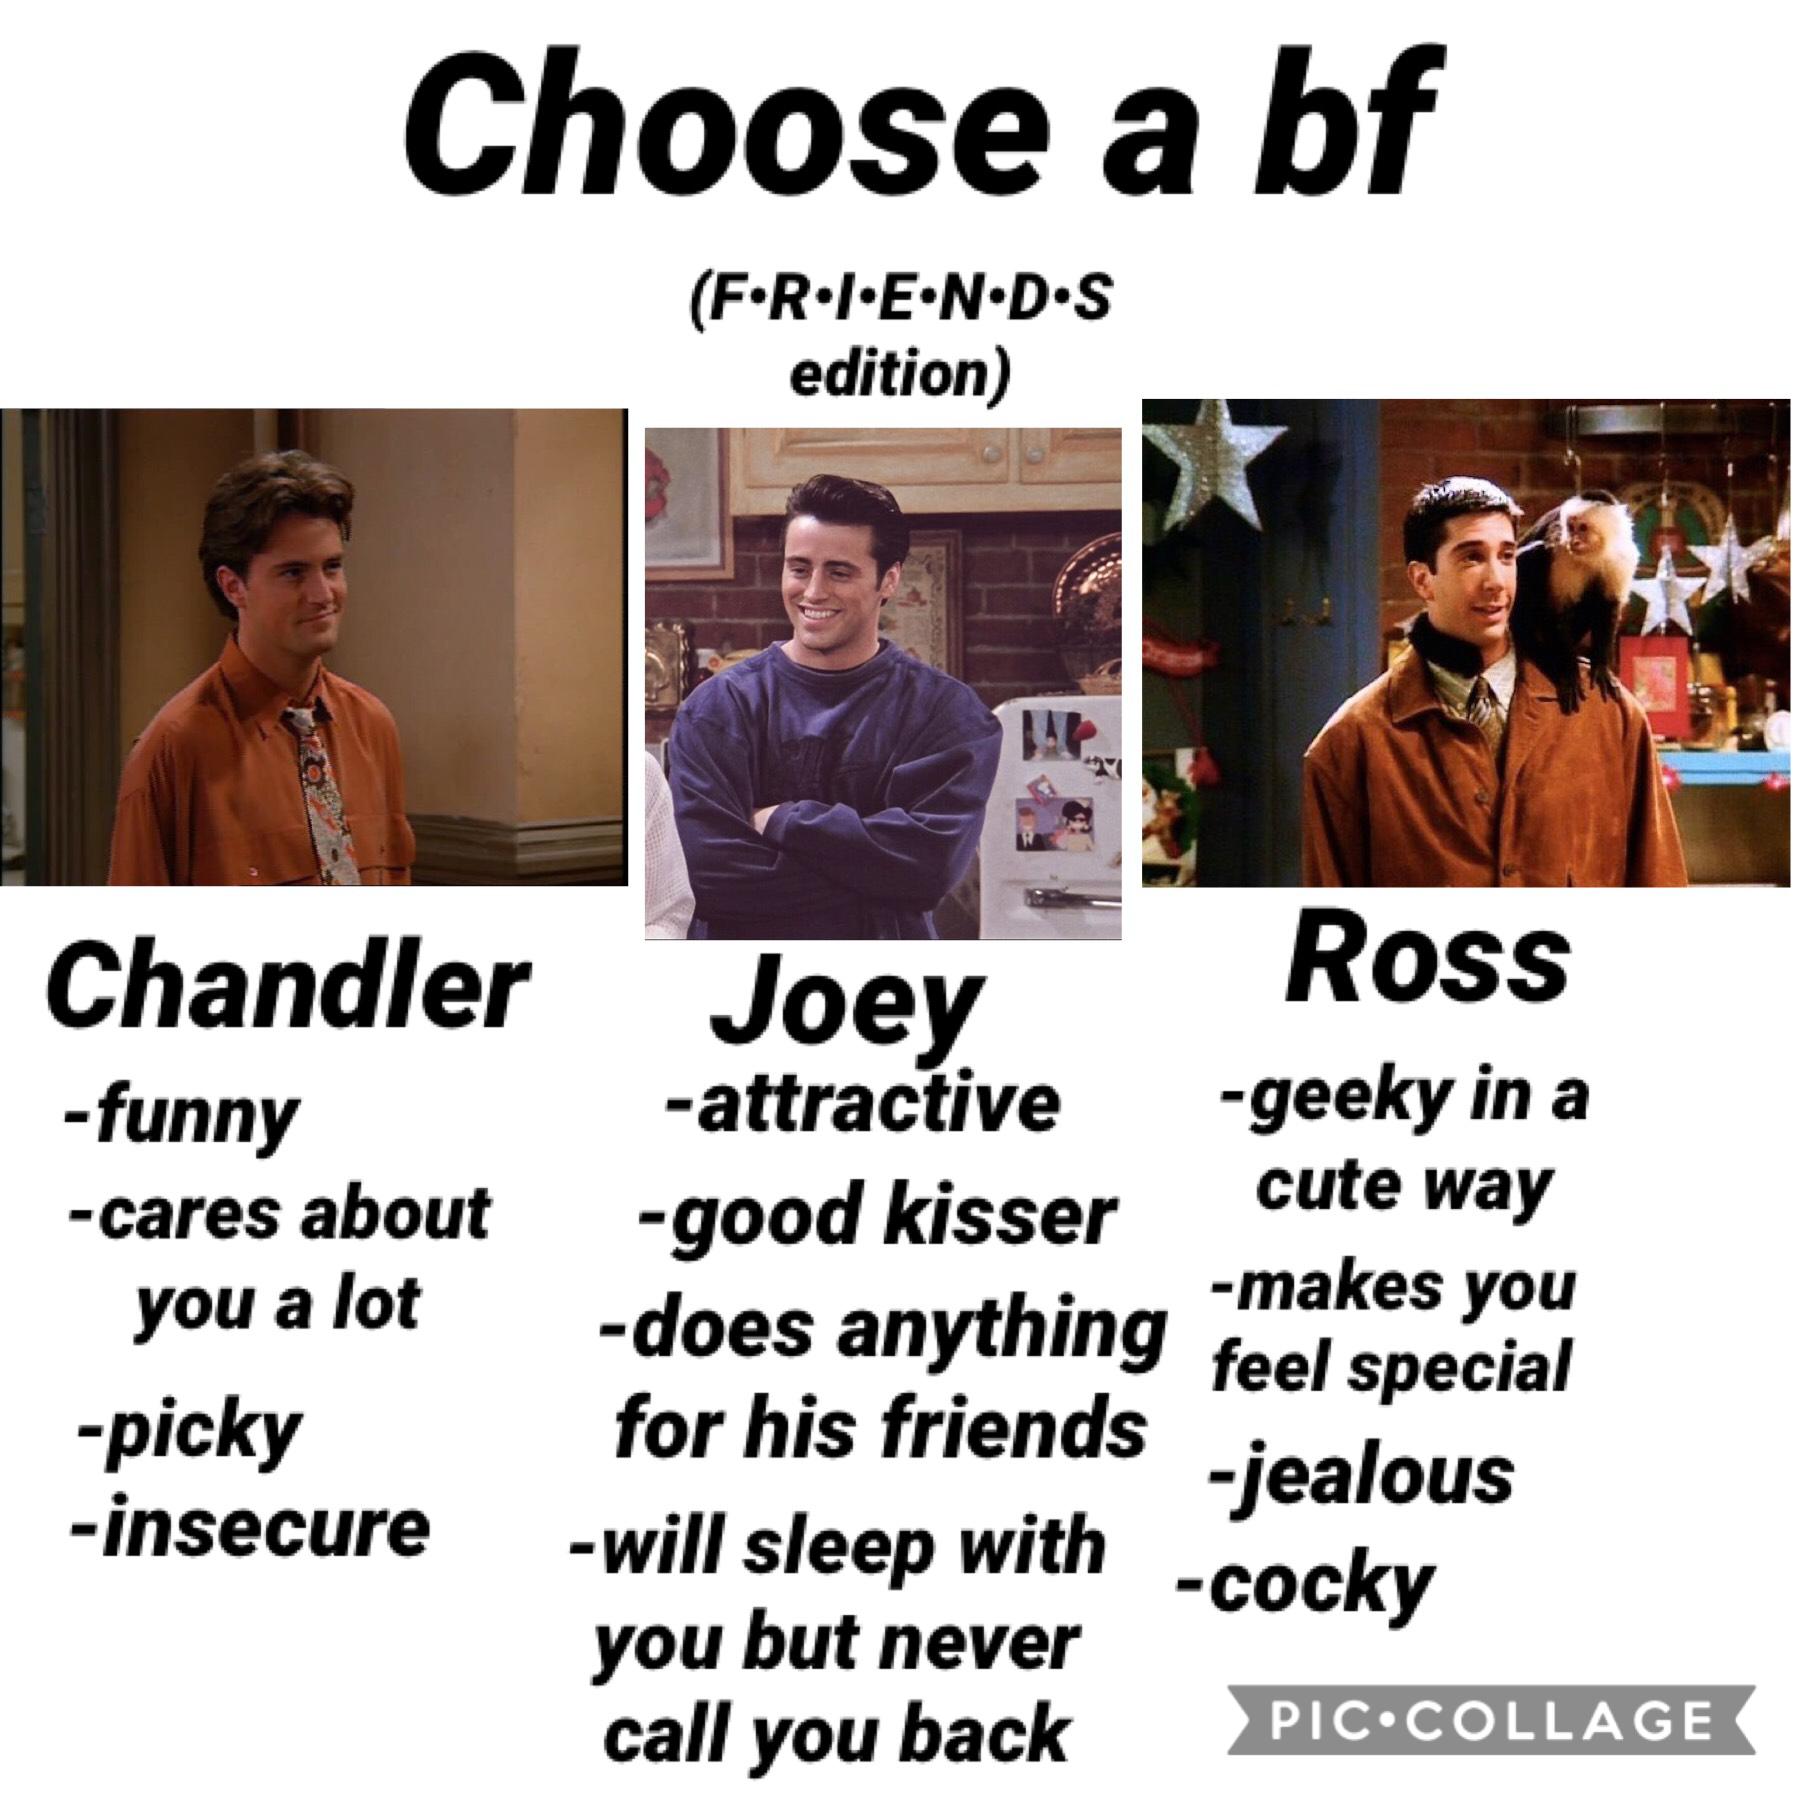 Who do you choose